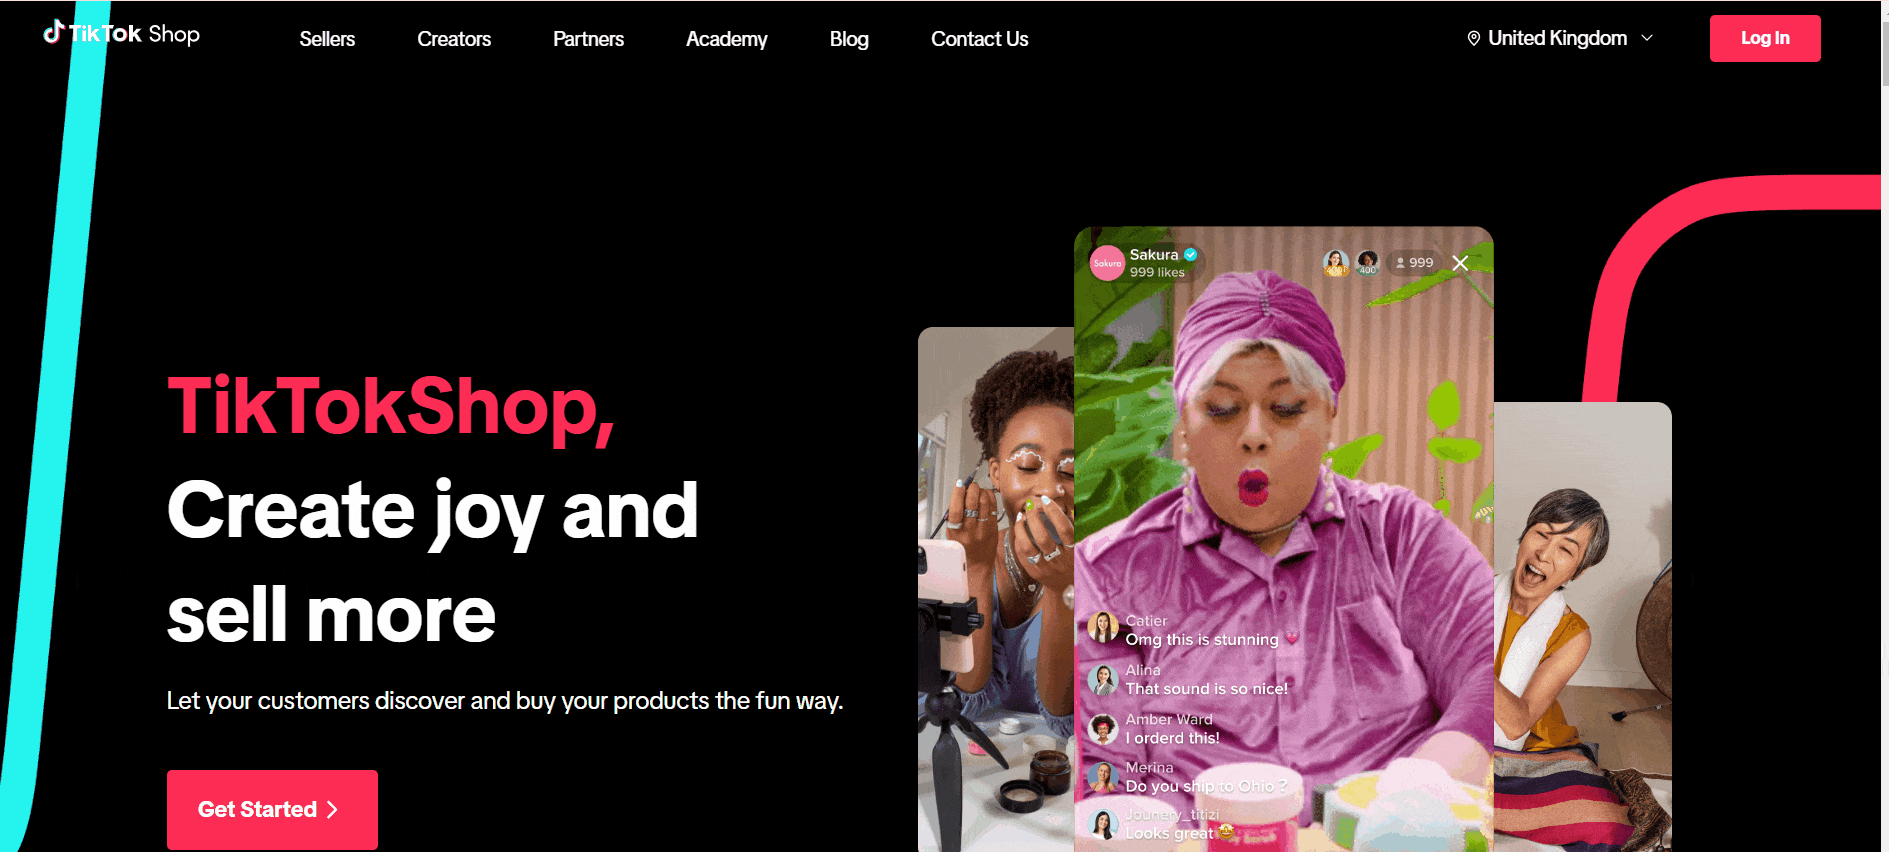 GIF of the online platform TikTok Shop